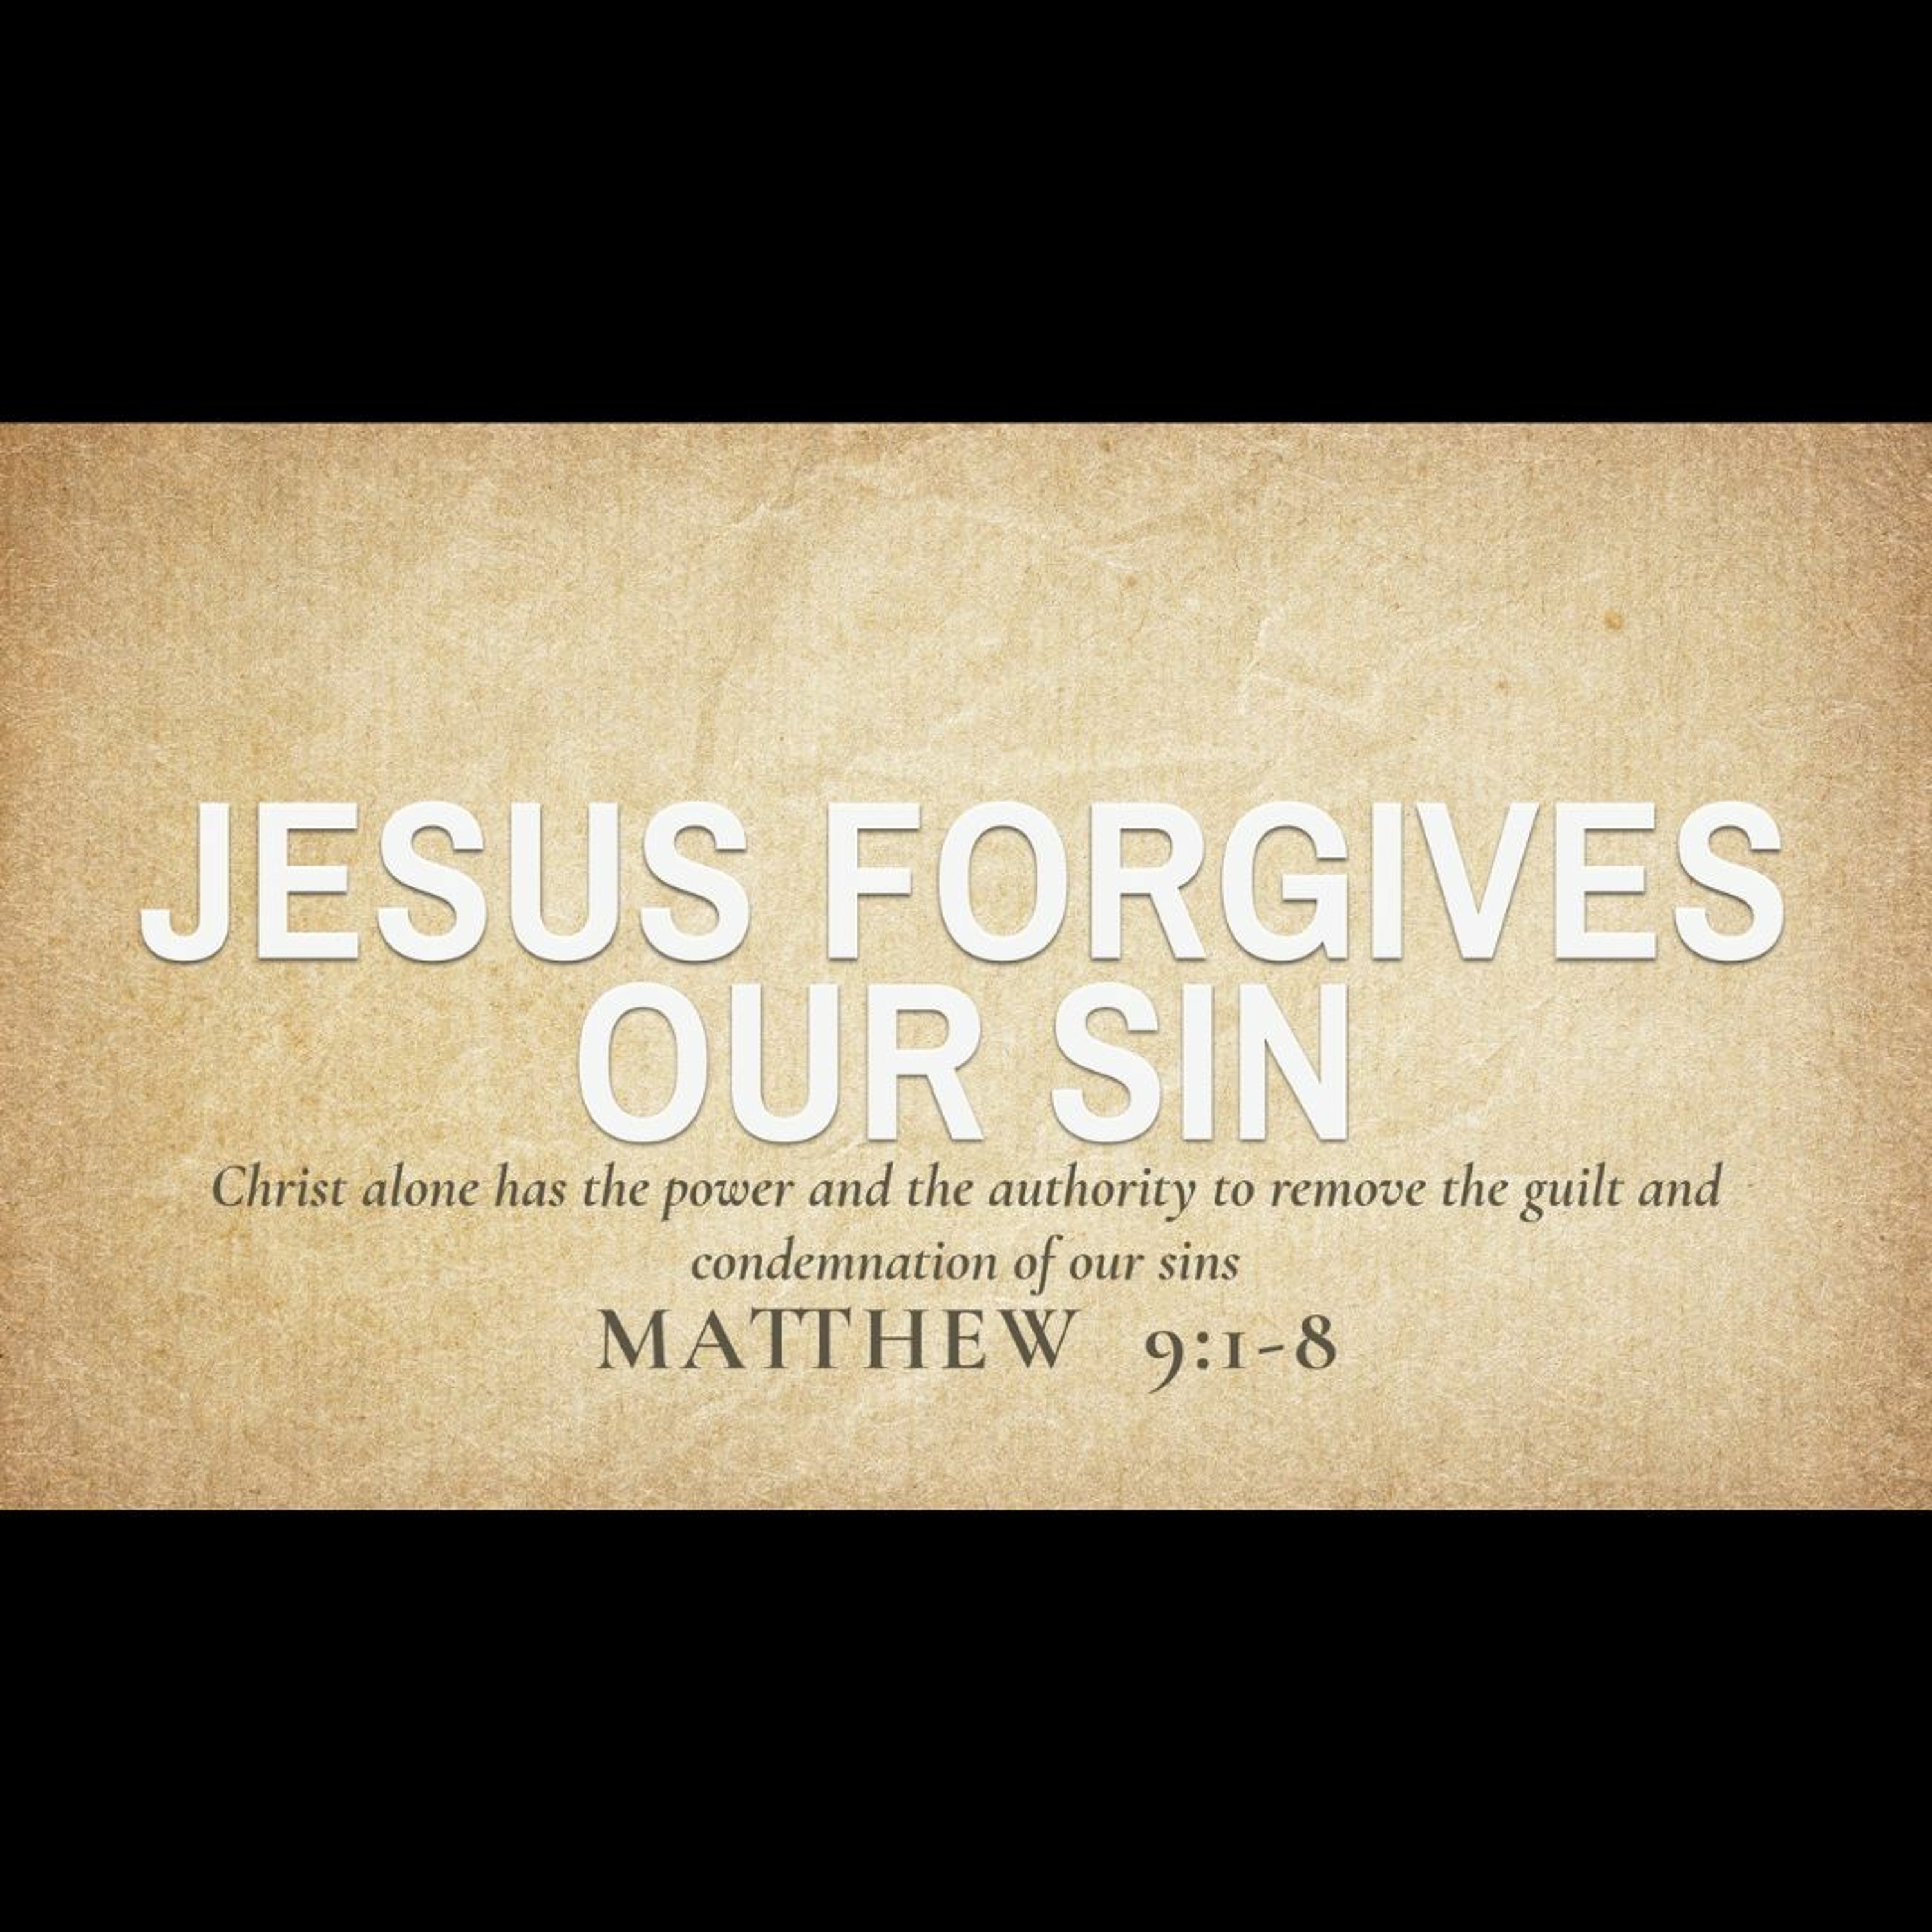 Jesus Forgives our Sin (Matthew 9:1-8)